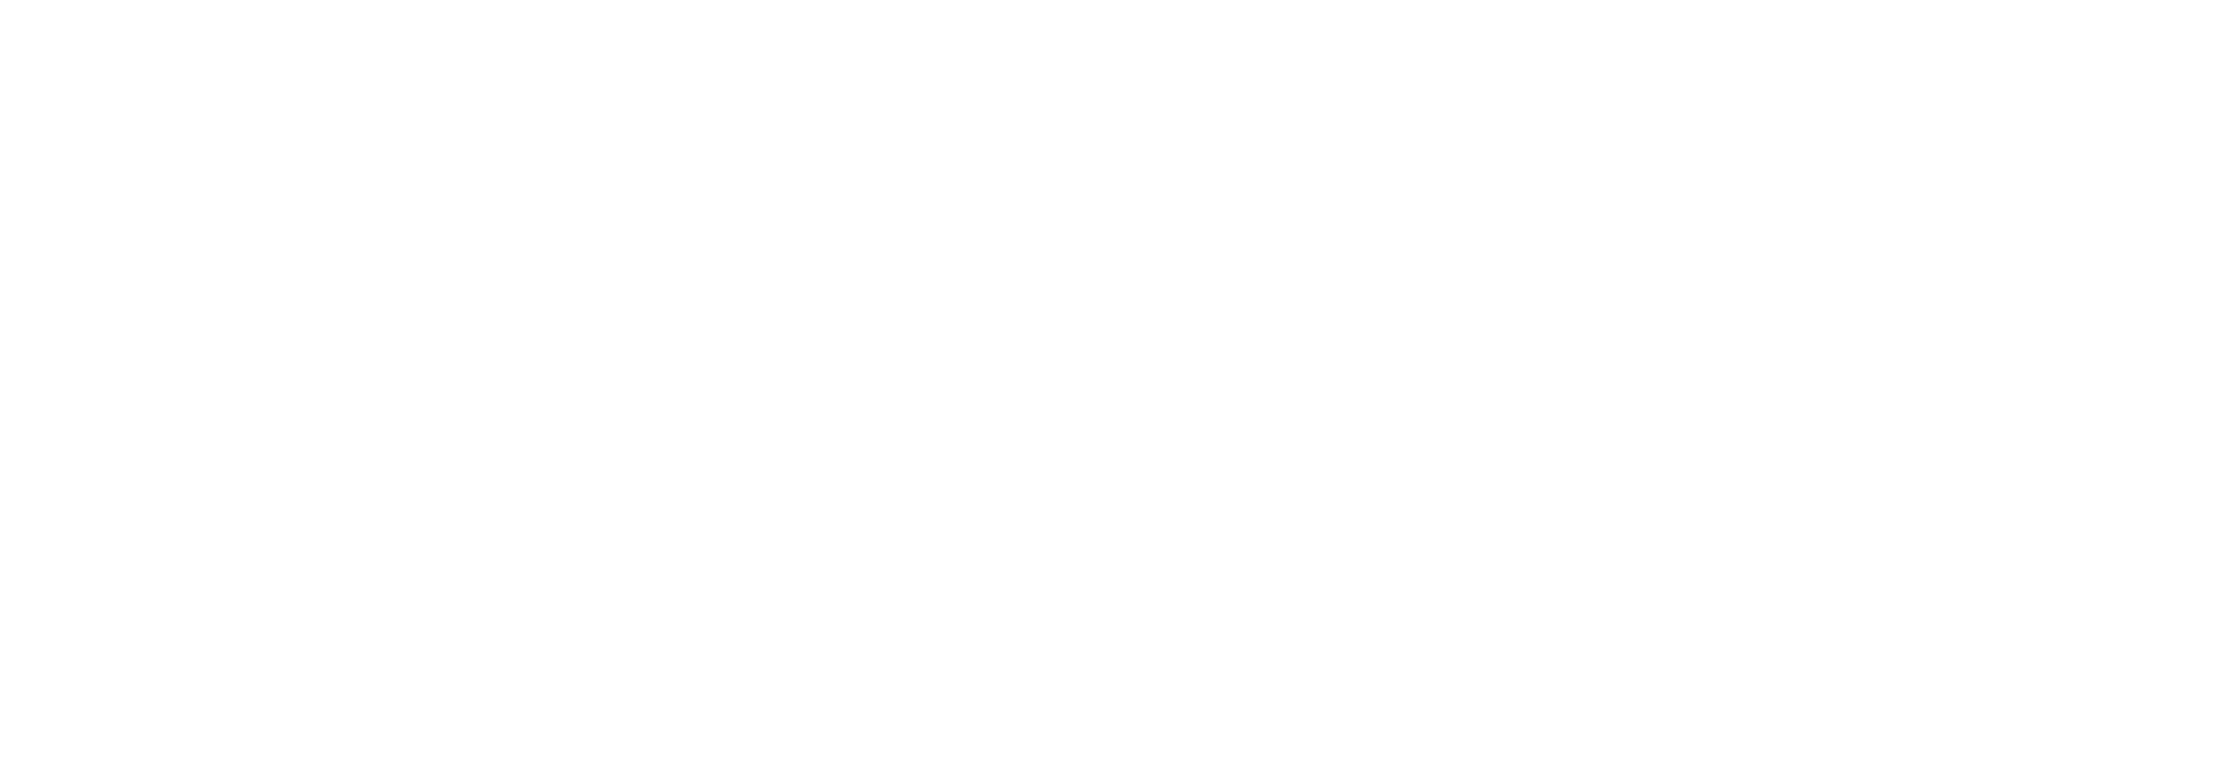 Tanglewood Hollow